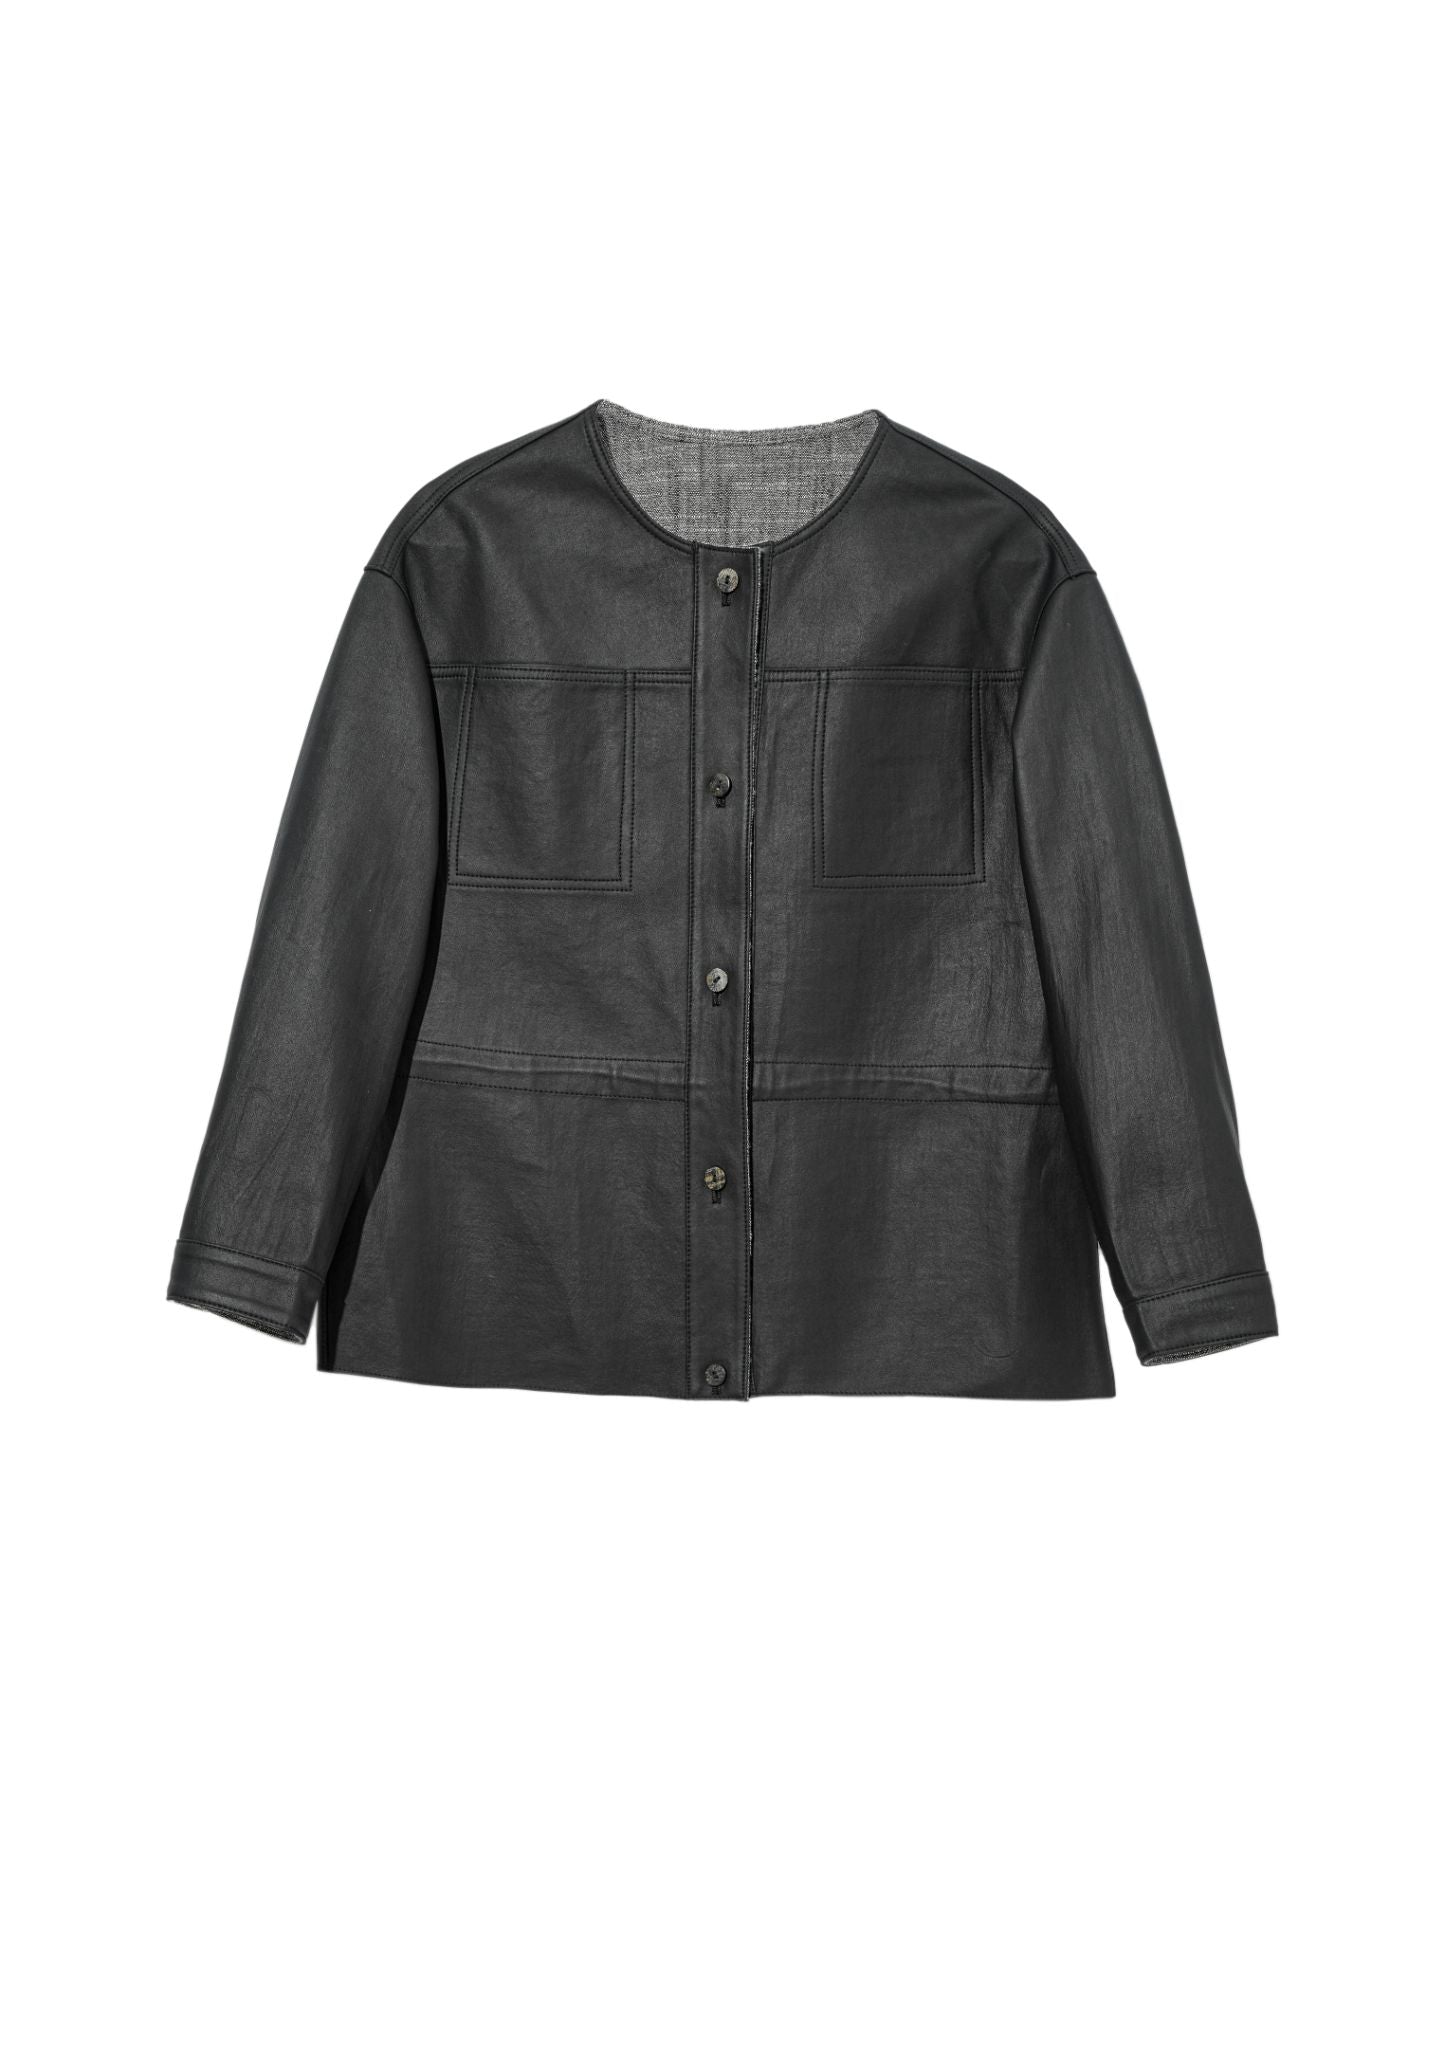 Urban Edge: Sleek Leather Jacket for Women